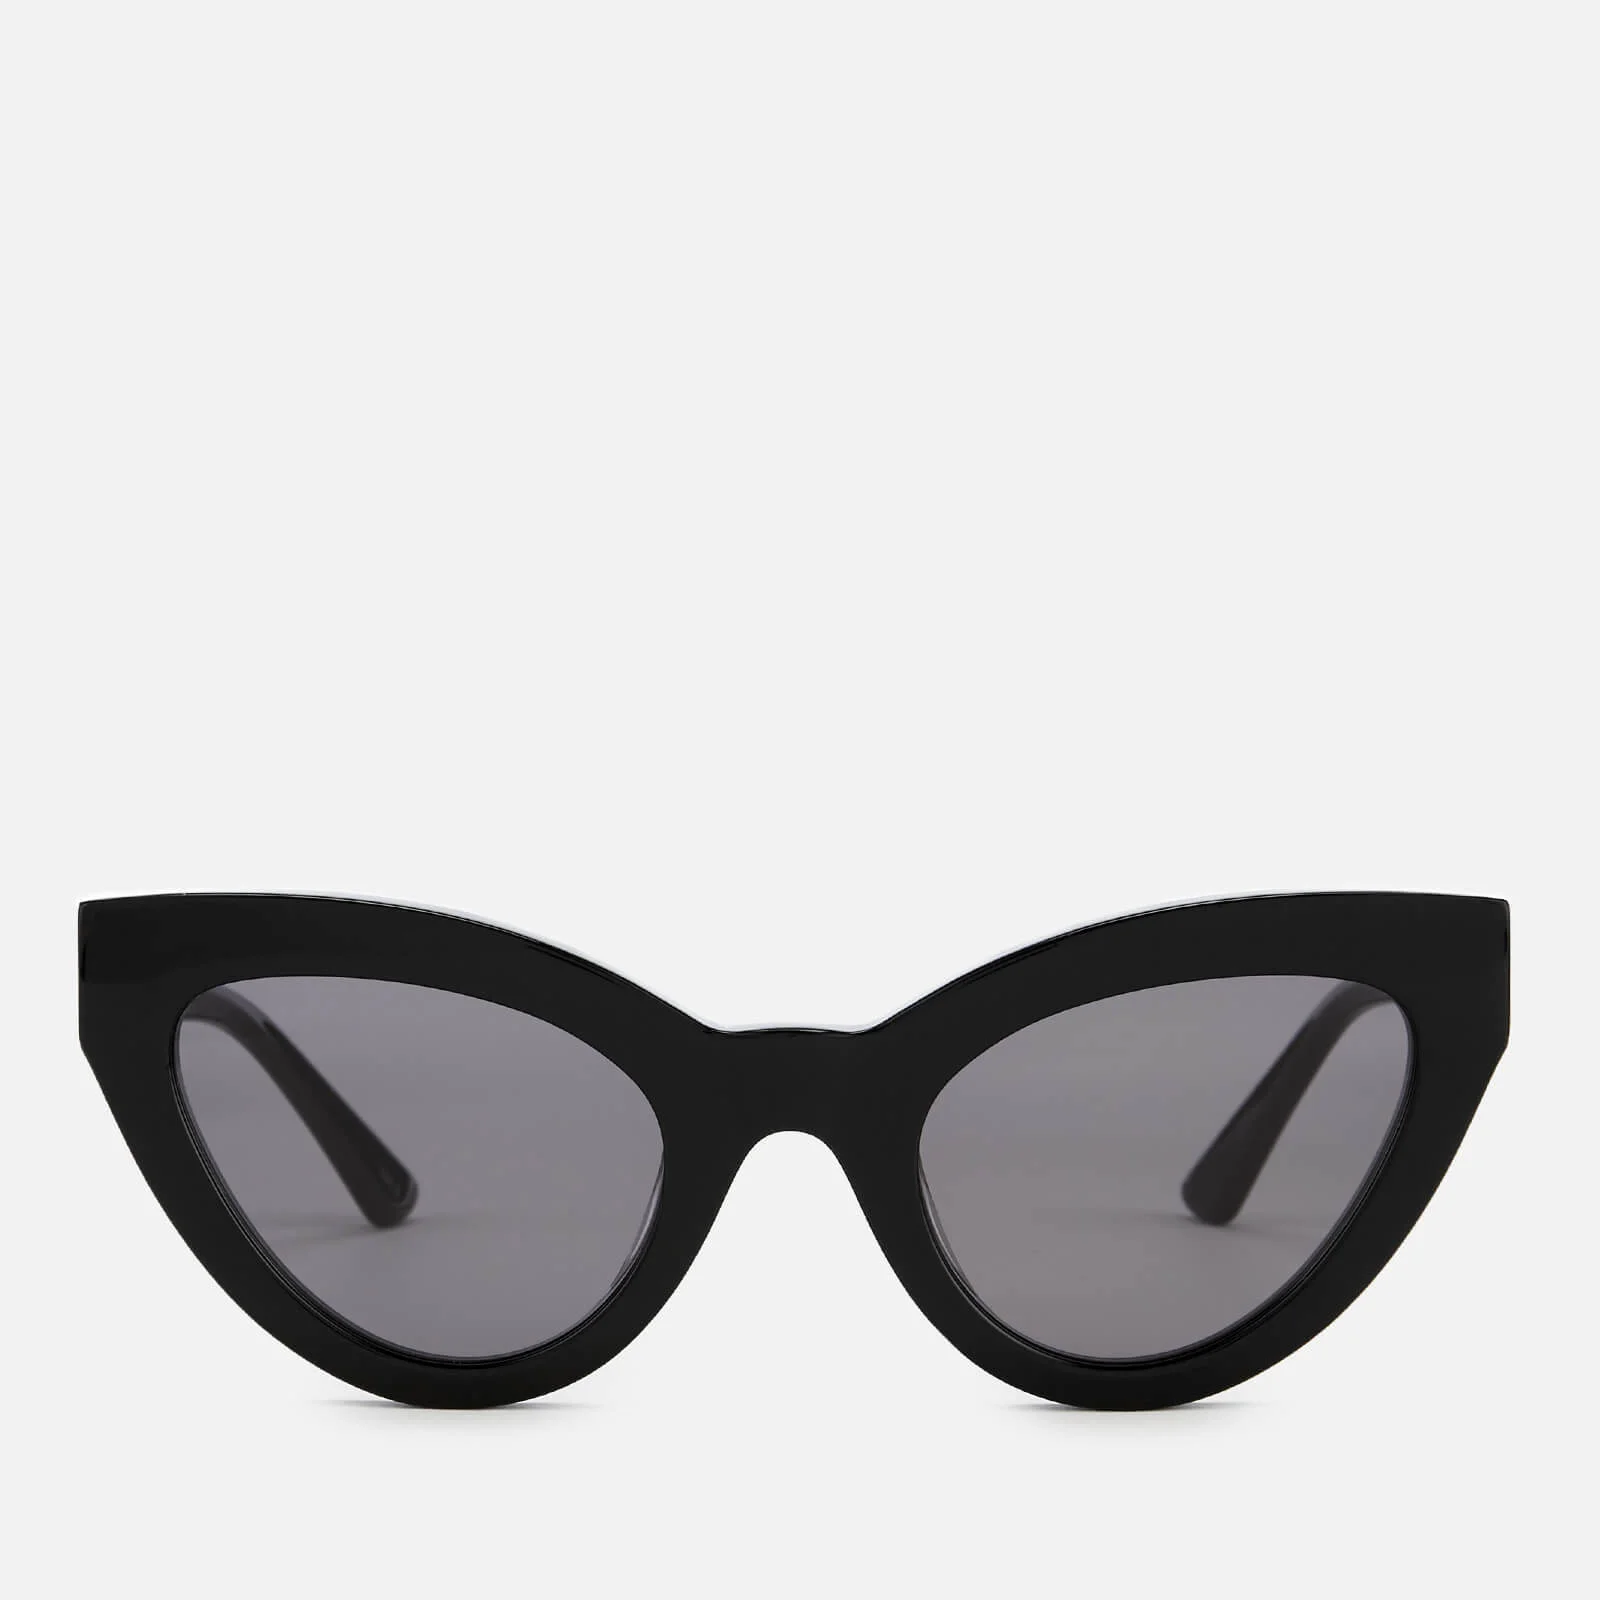 McQ Alexander McQueen Women's Cat-Eye Frame Sunglasses - Black Image 1